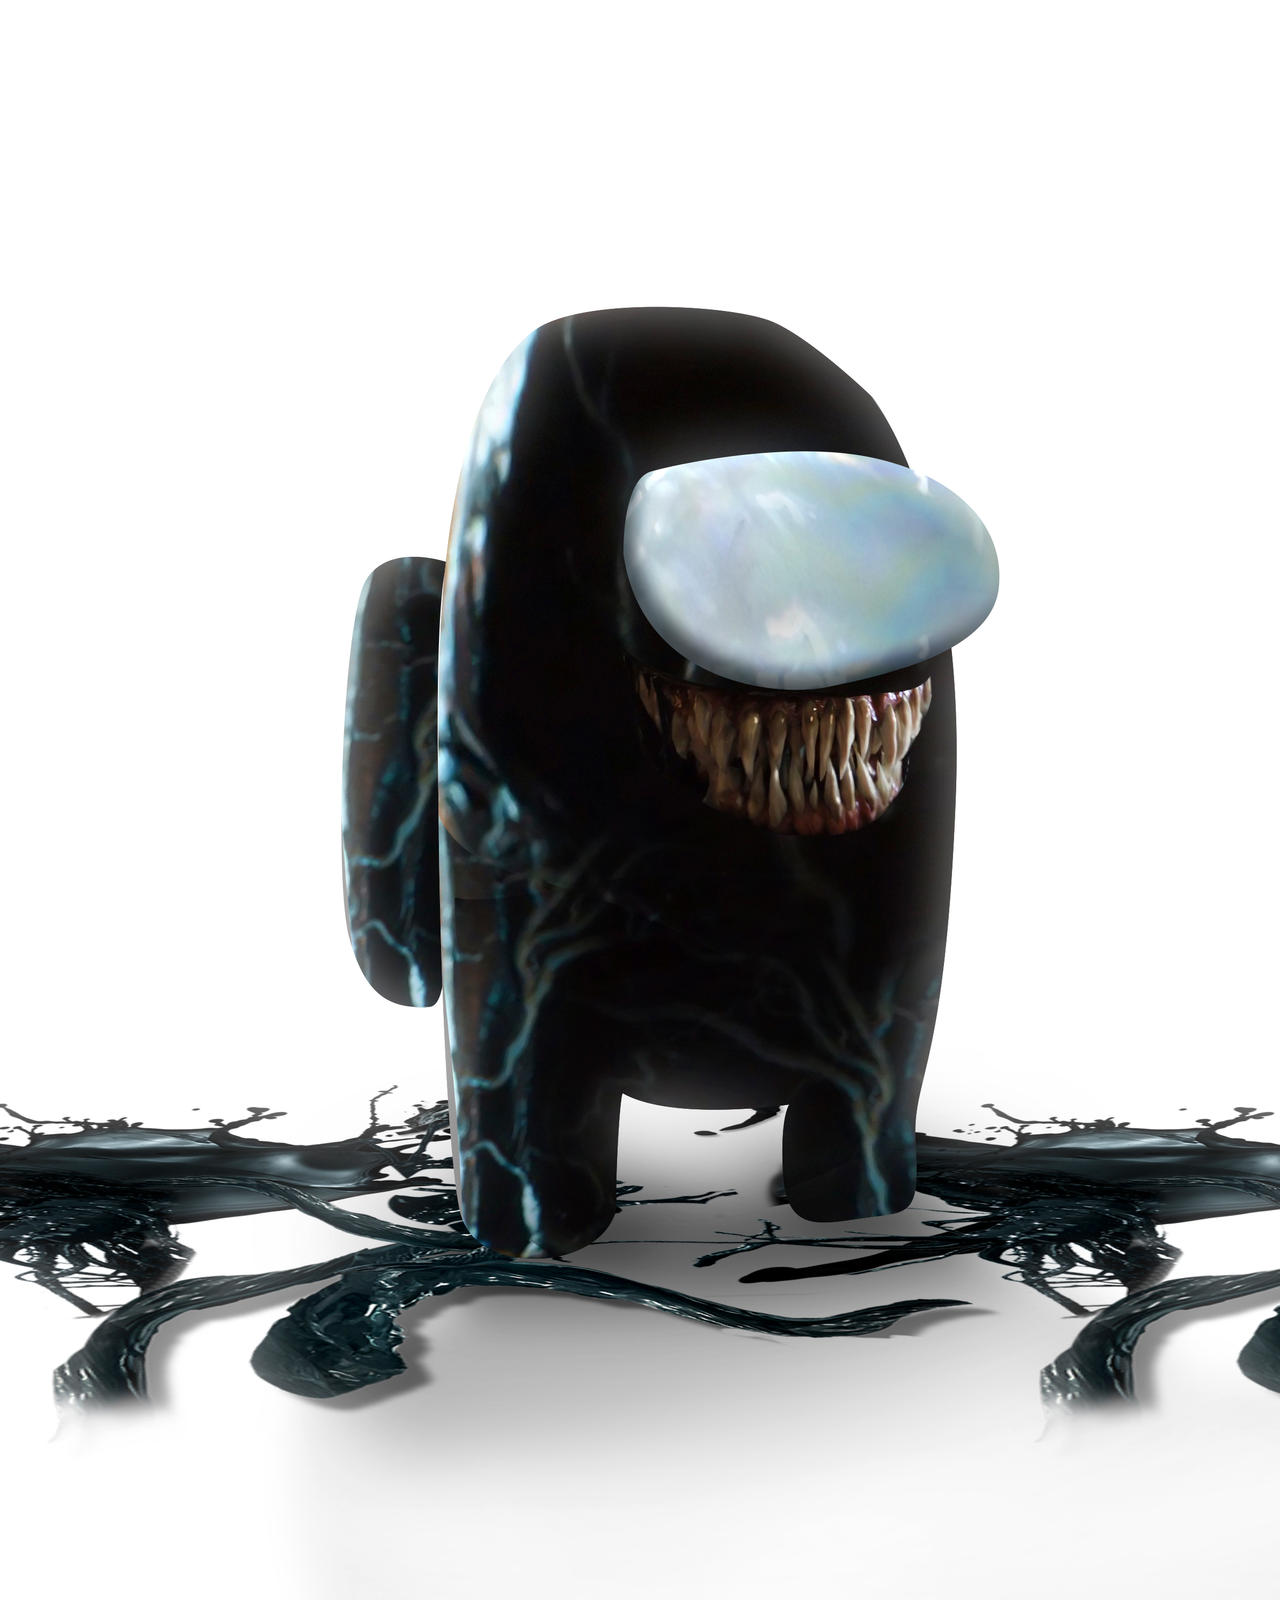 Venom Among Us - Among Us X Venom Symbiote Amongus - You gonna stop